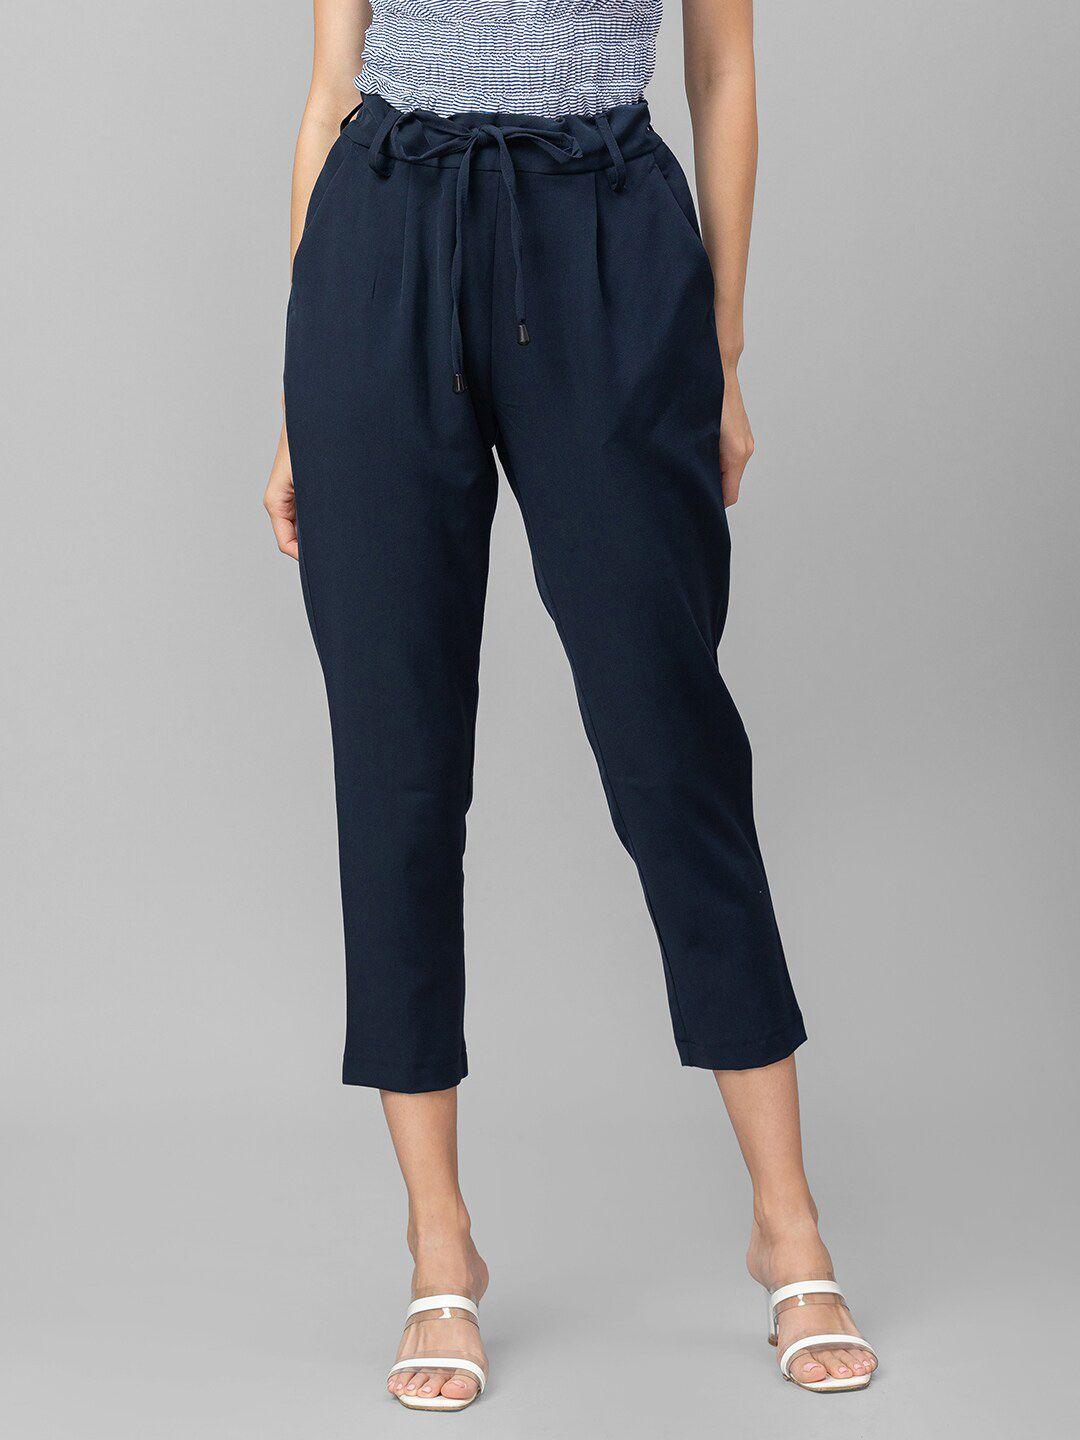 globus women navy blue pleated trousers